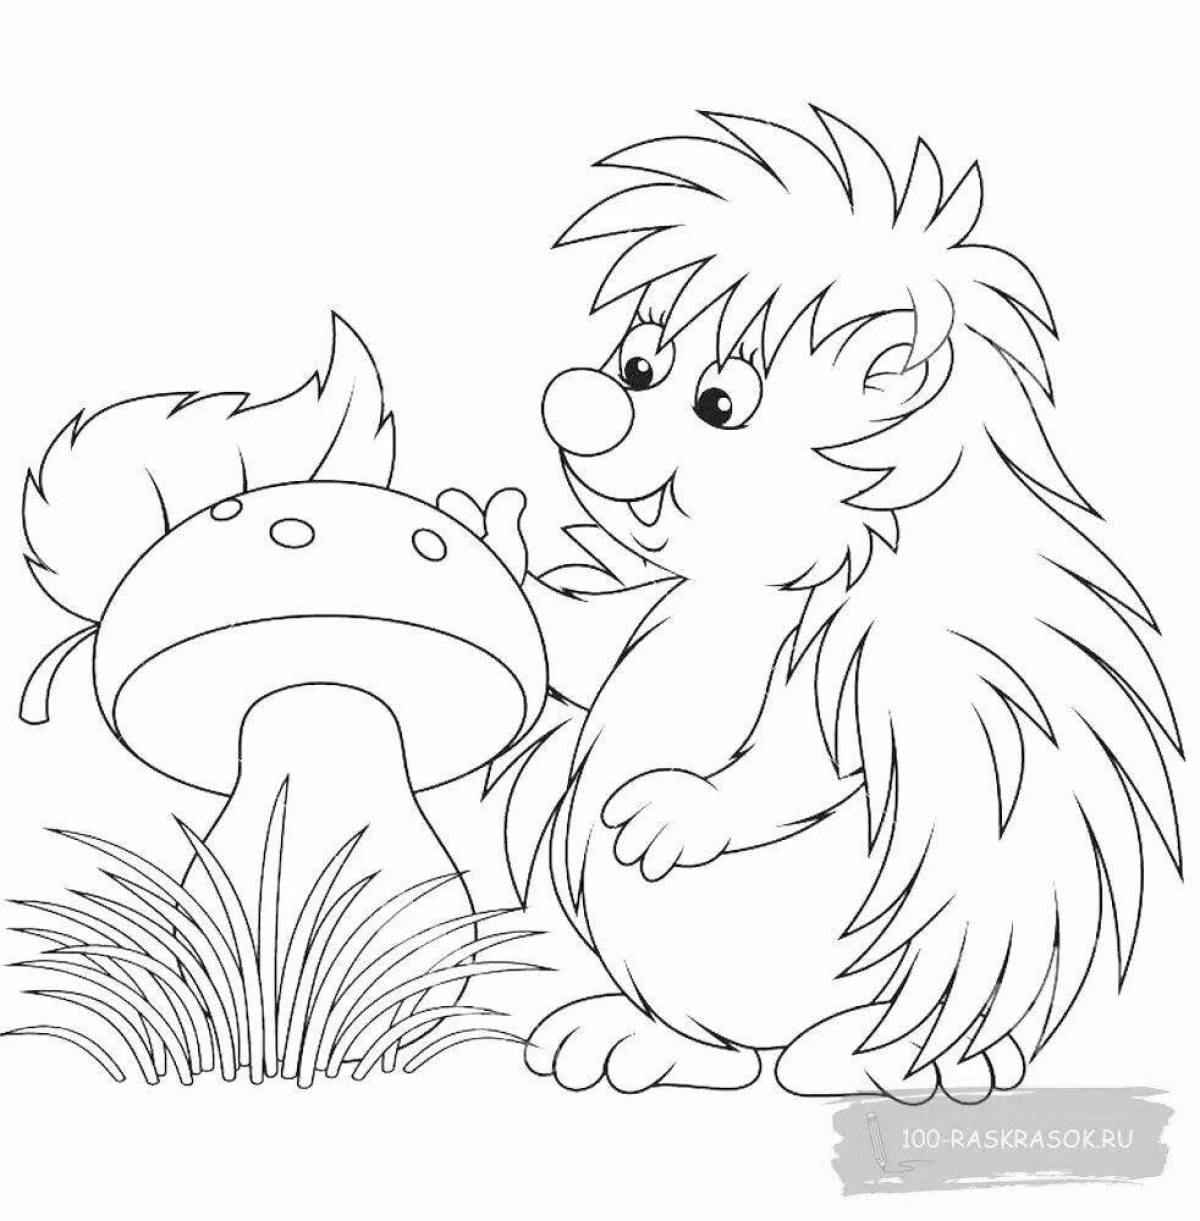 Fun coloring hedgehog and bear cub